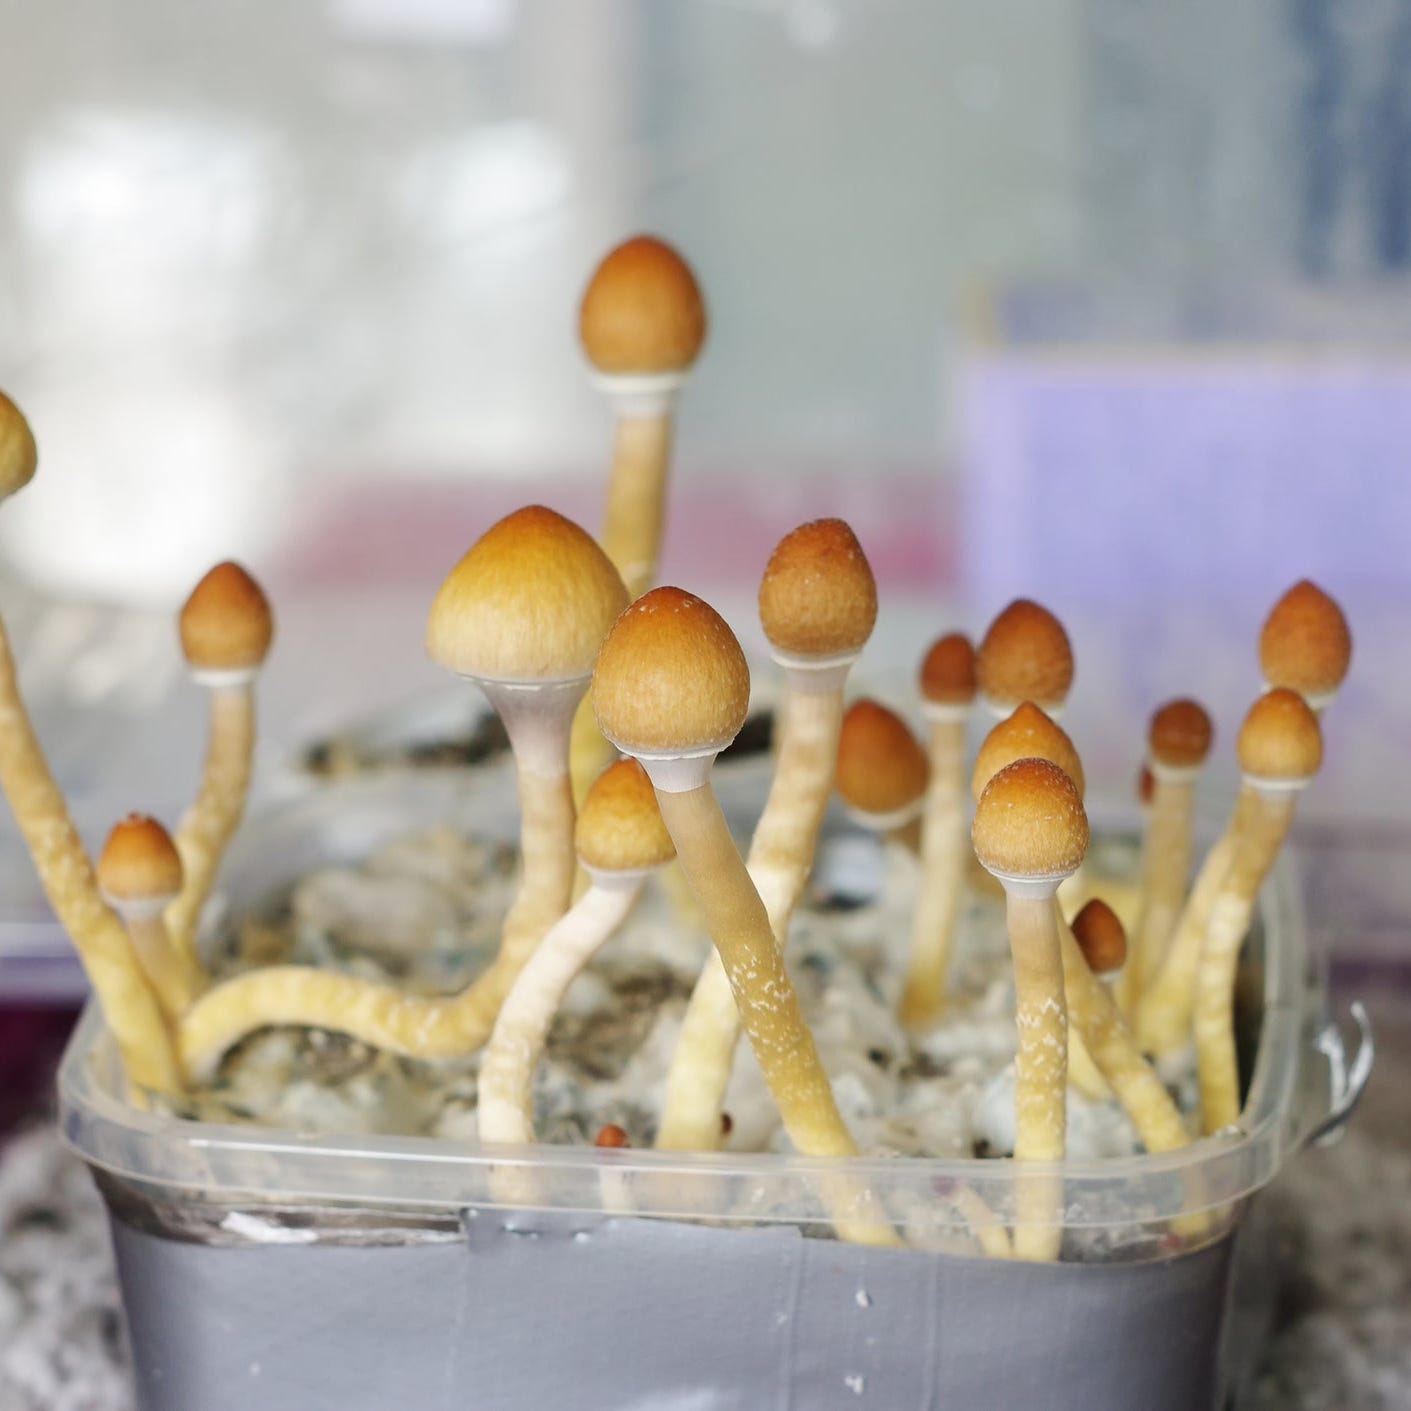 MotleyFool-TMOT-f086f8df-magic-mushrooms.jpg